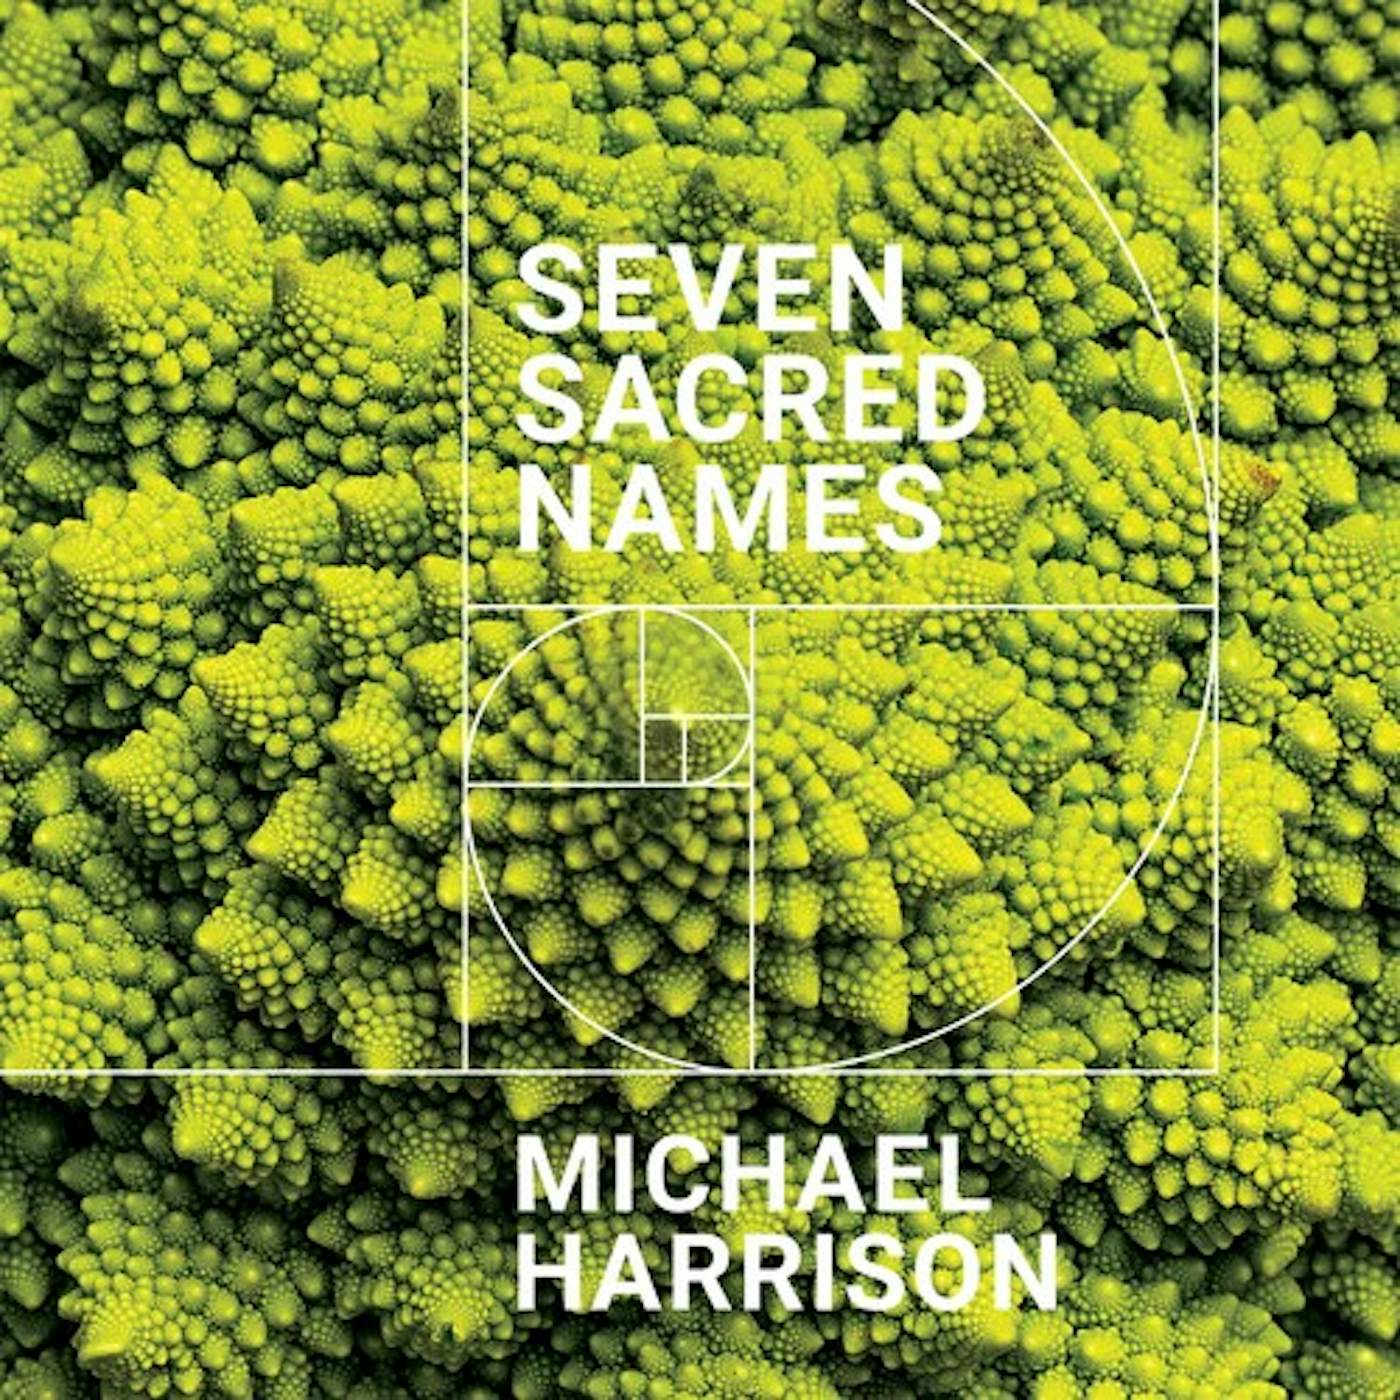 Harrison SEVEN SACRED NAMES CD